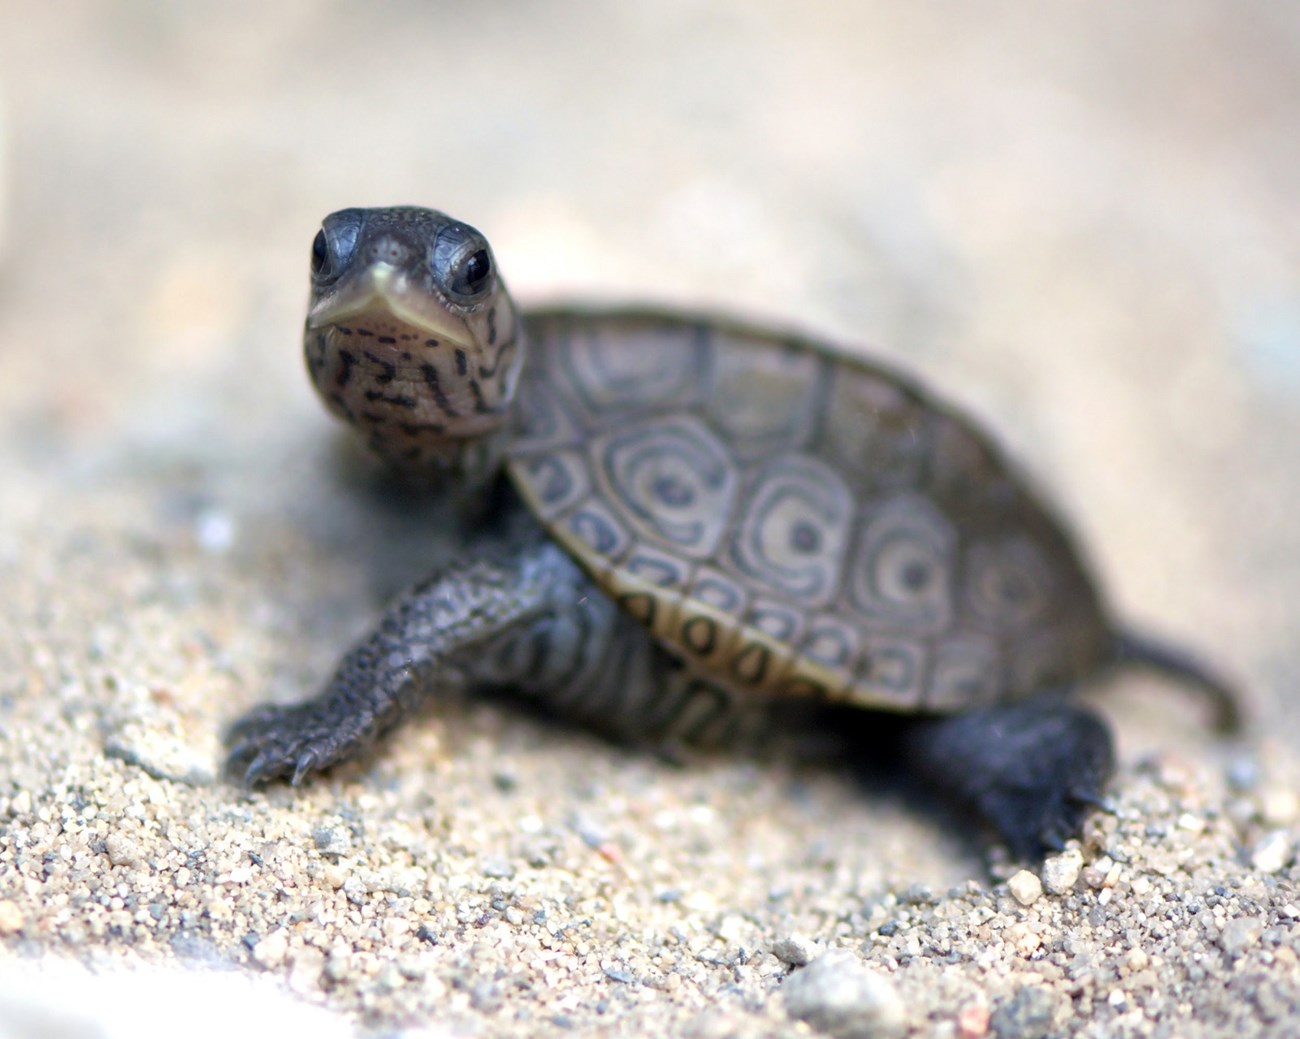 The diamondback terrapin (Malaclemys terrapin) is a unique turtle species. Photo credit: Sally Spooner.